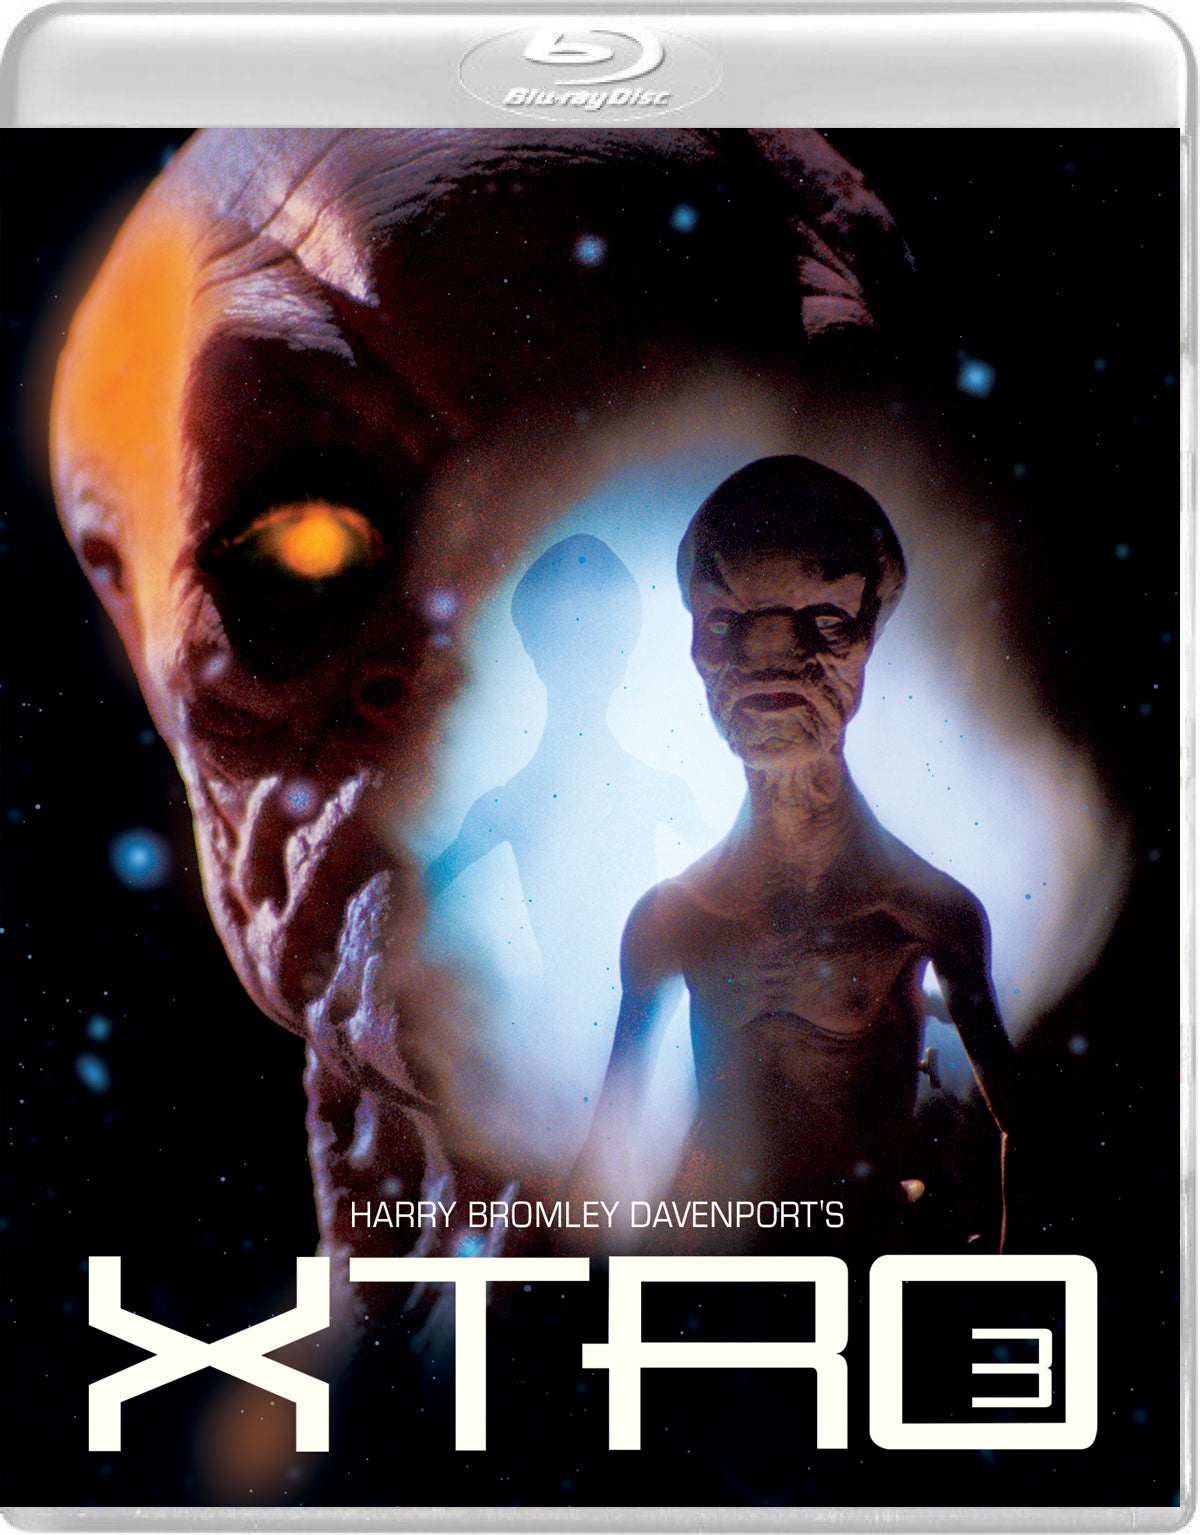 XTRO 3: Watch the Skies [Blu-ray] cover art